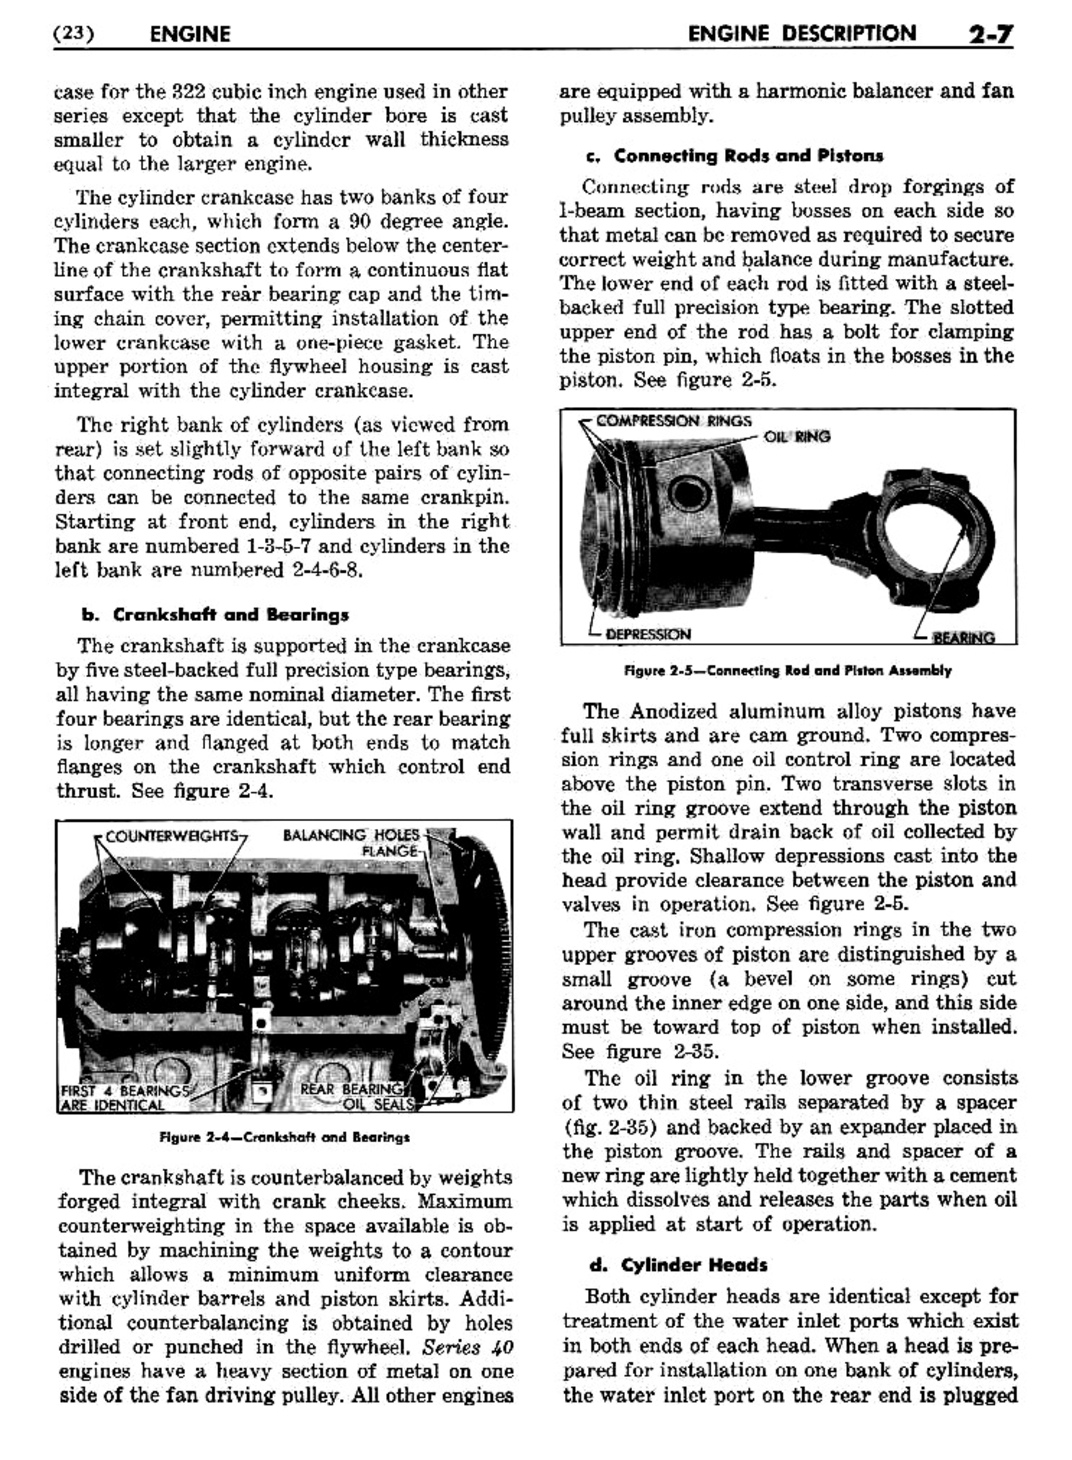 n_03 1954 Buick Shop Manual - Engine-007-007.jpg